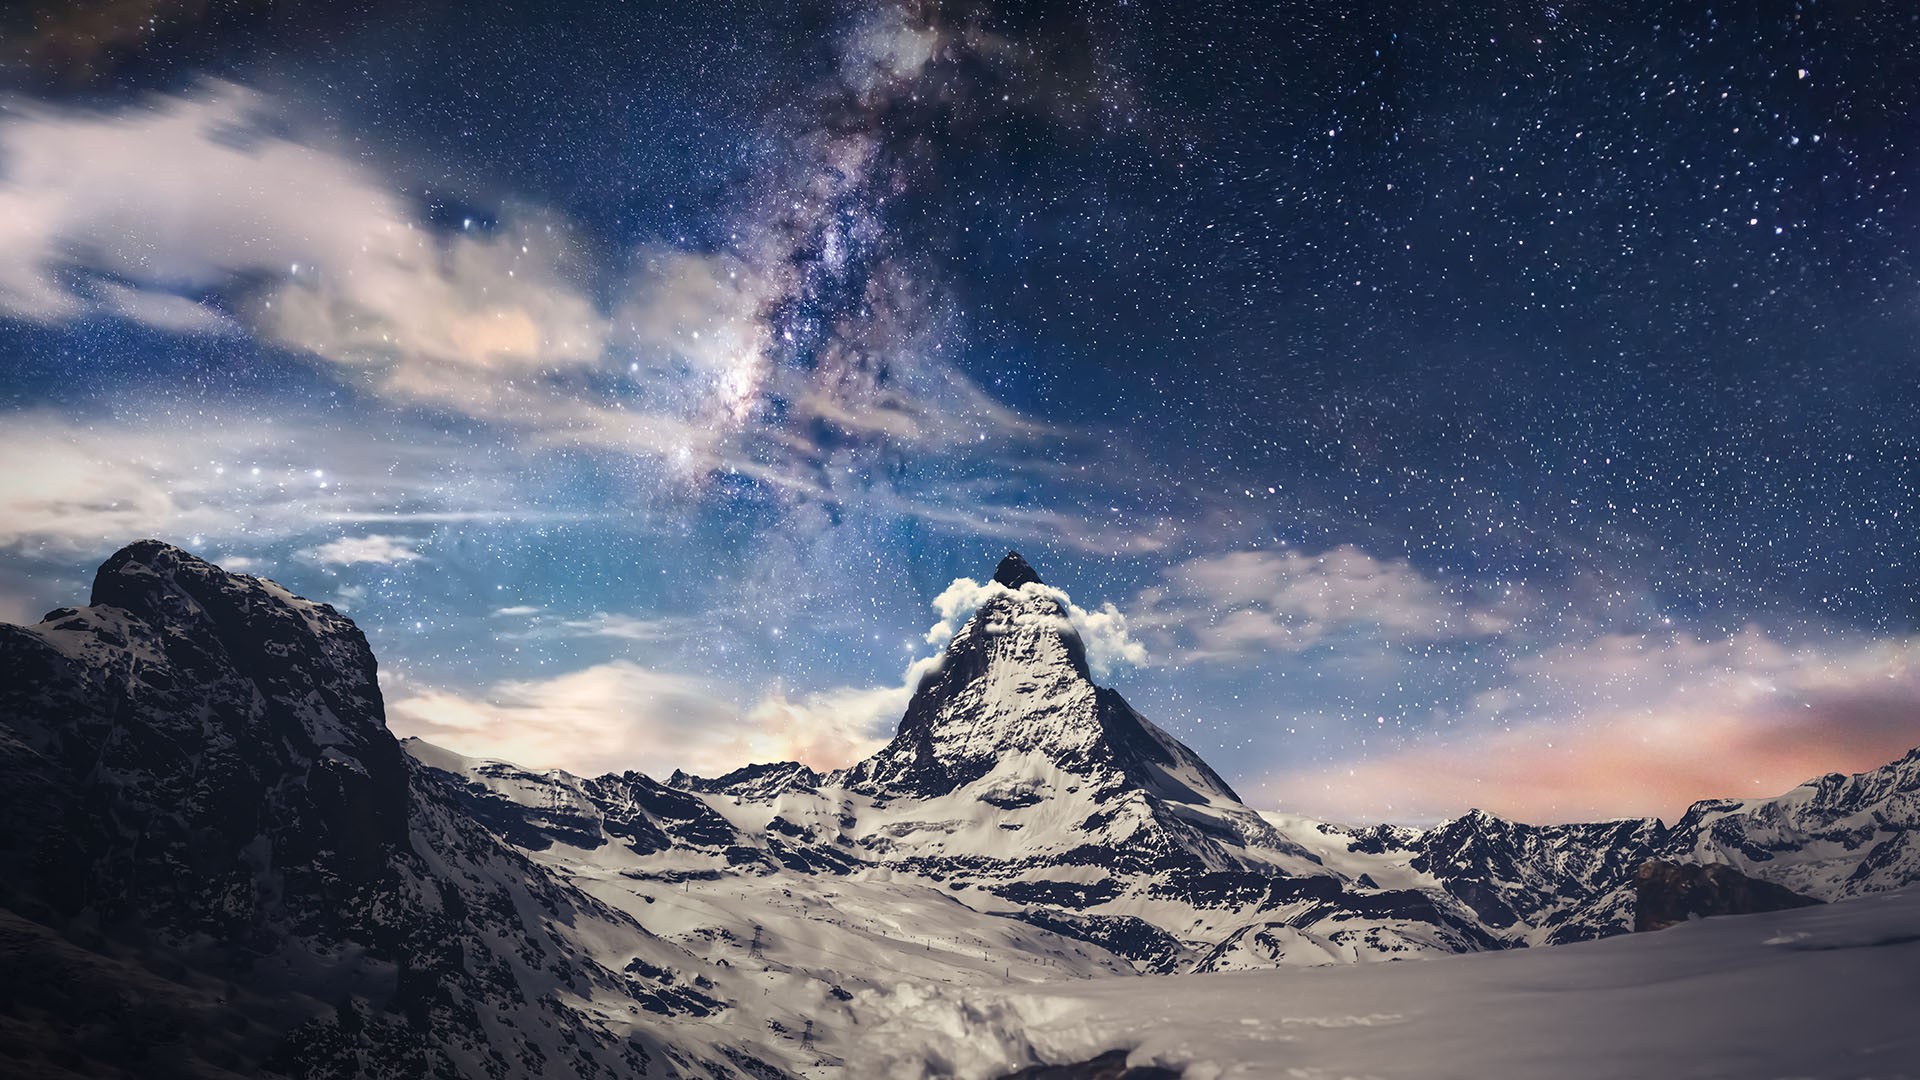 General 1920x1080 nature landscape far view mountains snow clouds rocks stars galaxy Milky Way night Matterhorn Zermatt Switzerland